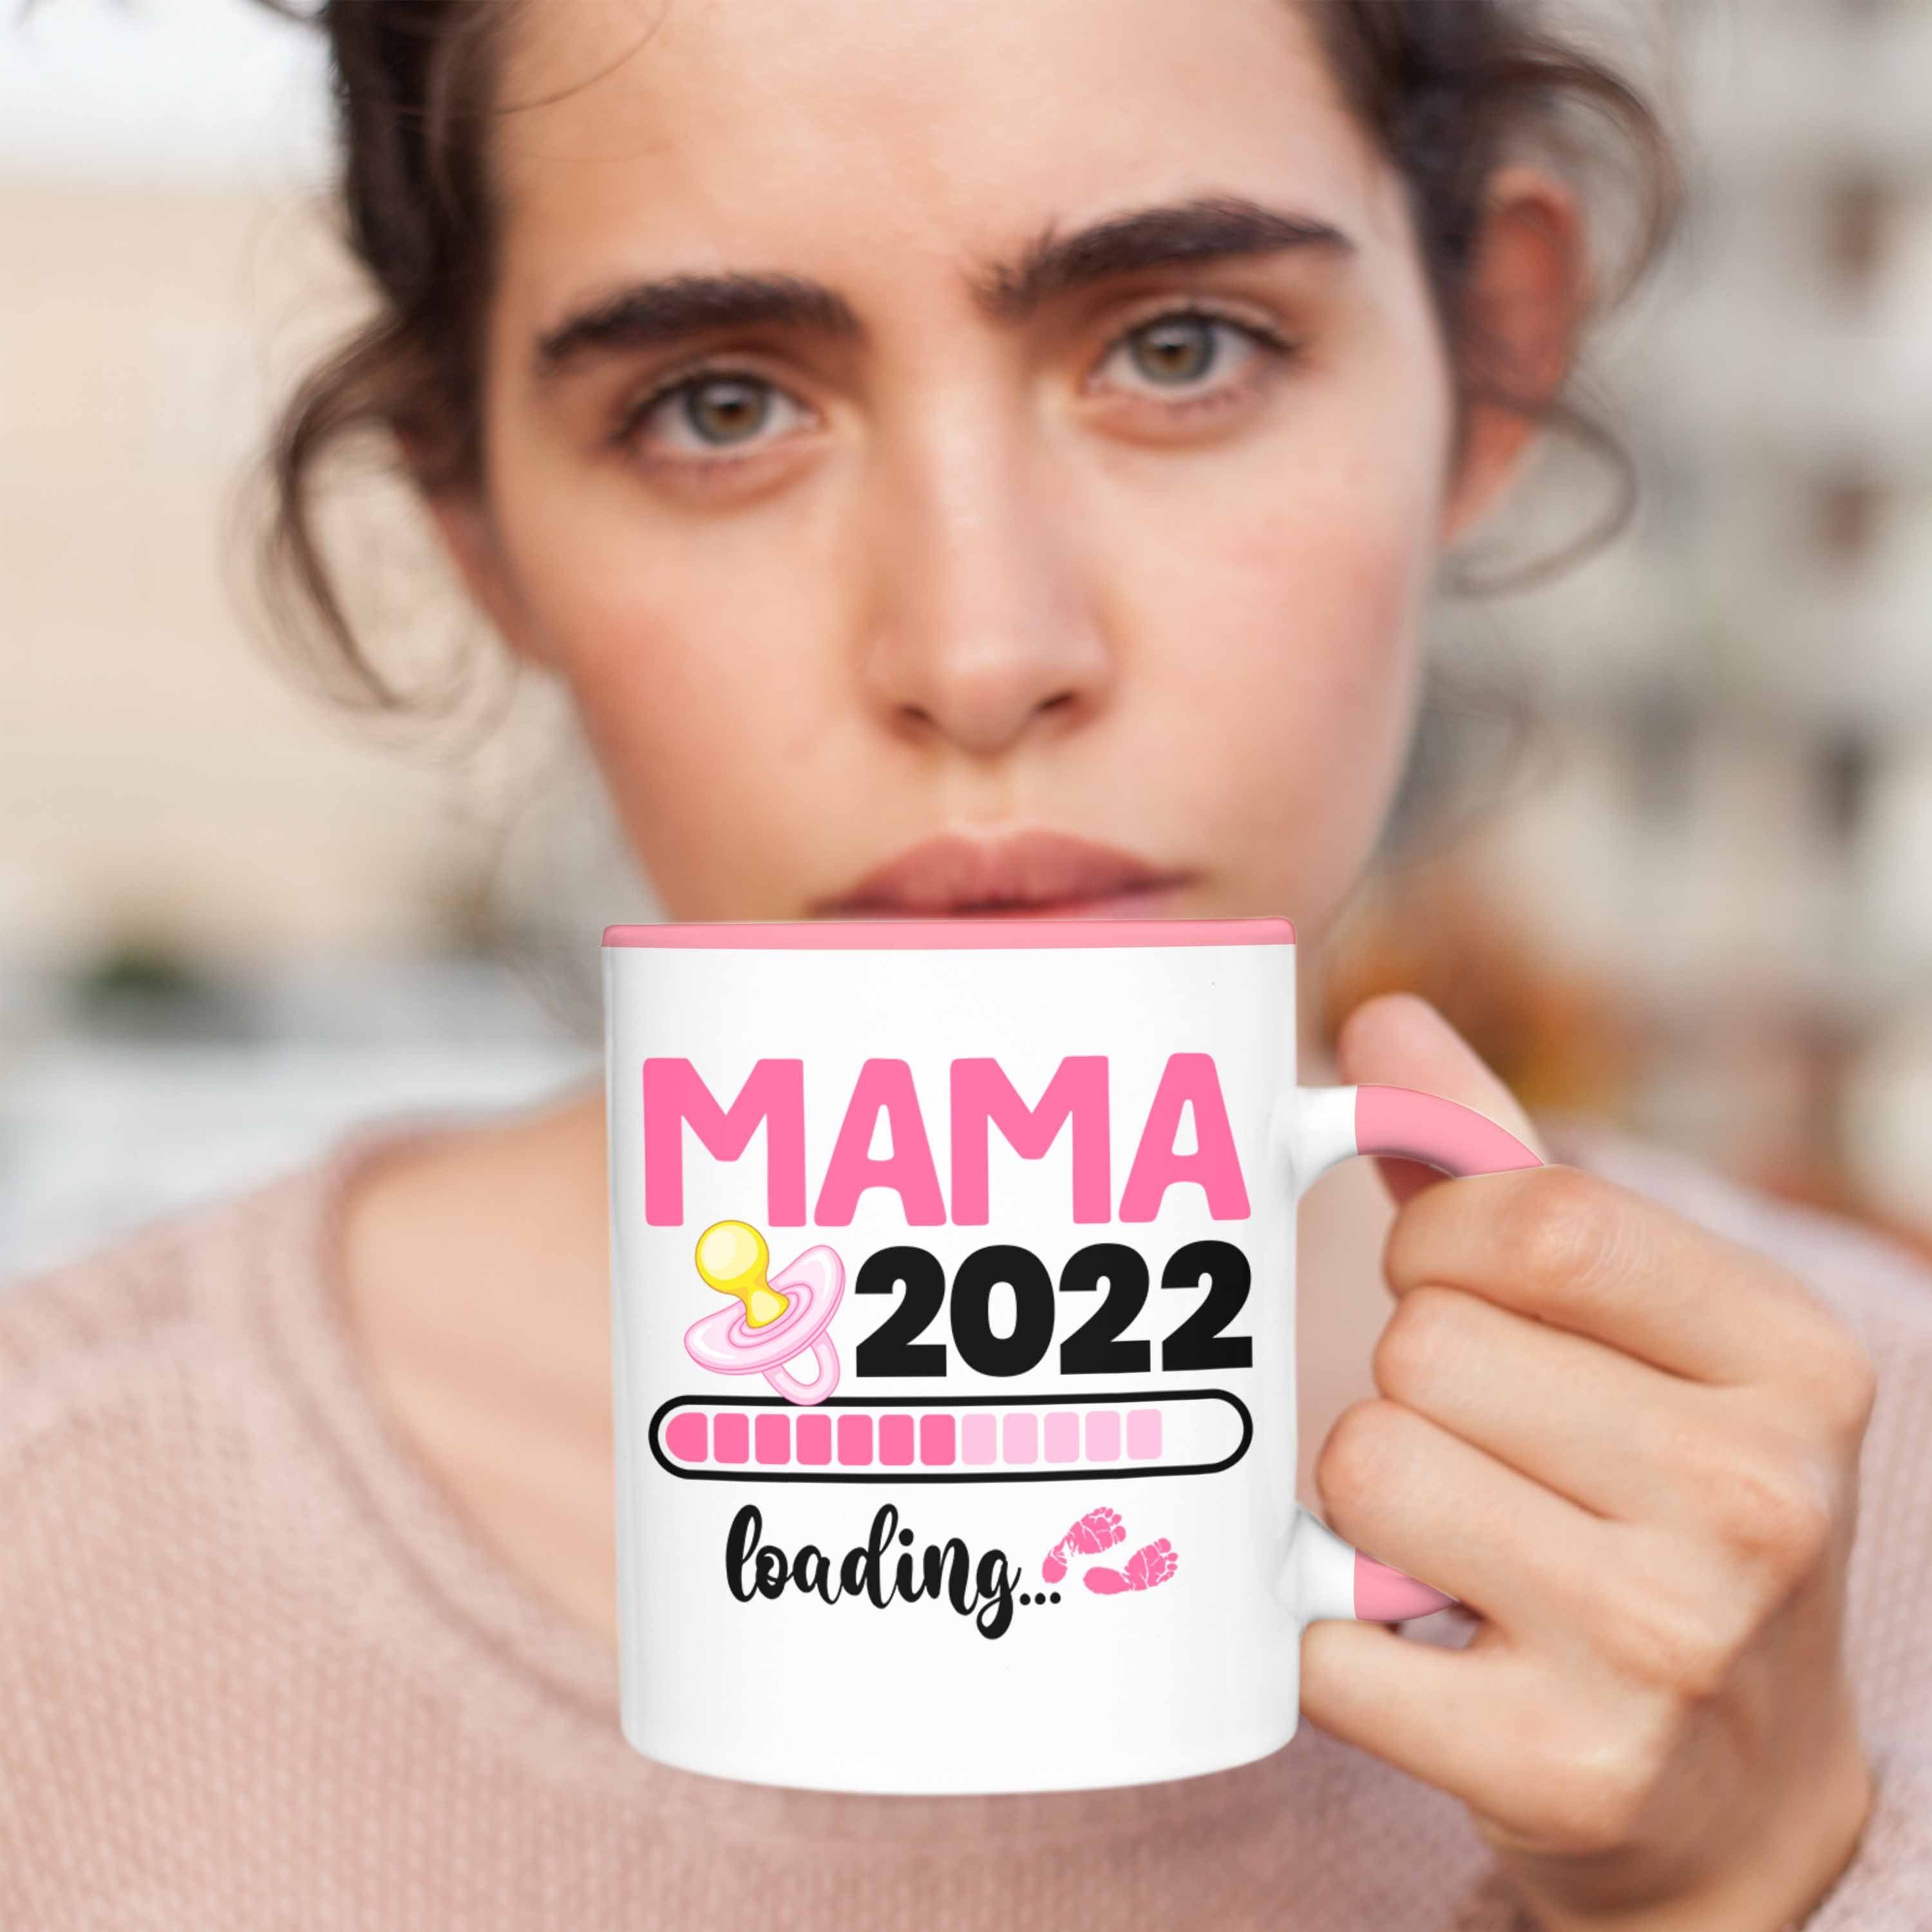 Mama 2022 - Tasse Überraschung Trendation Loading Schwanger Trendation Rosa Tasse Schwangerschaftsverkündung